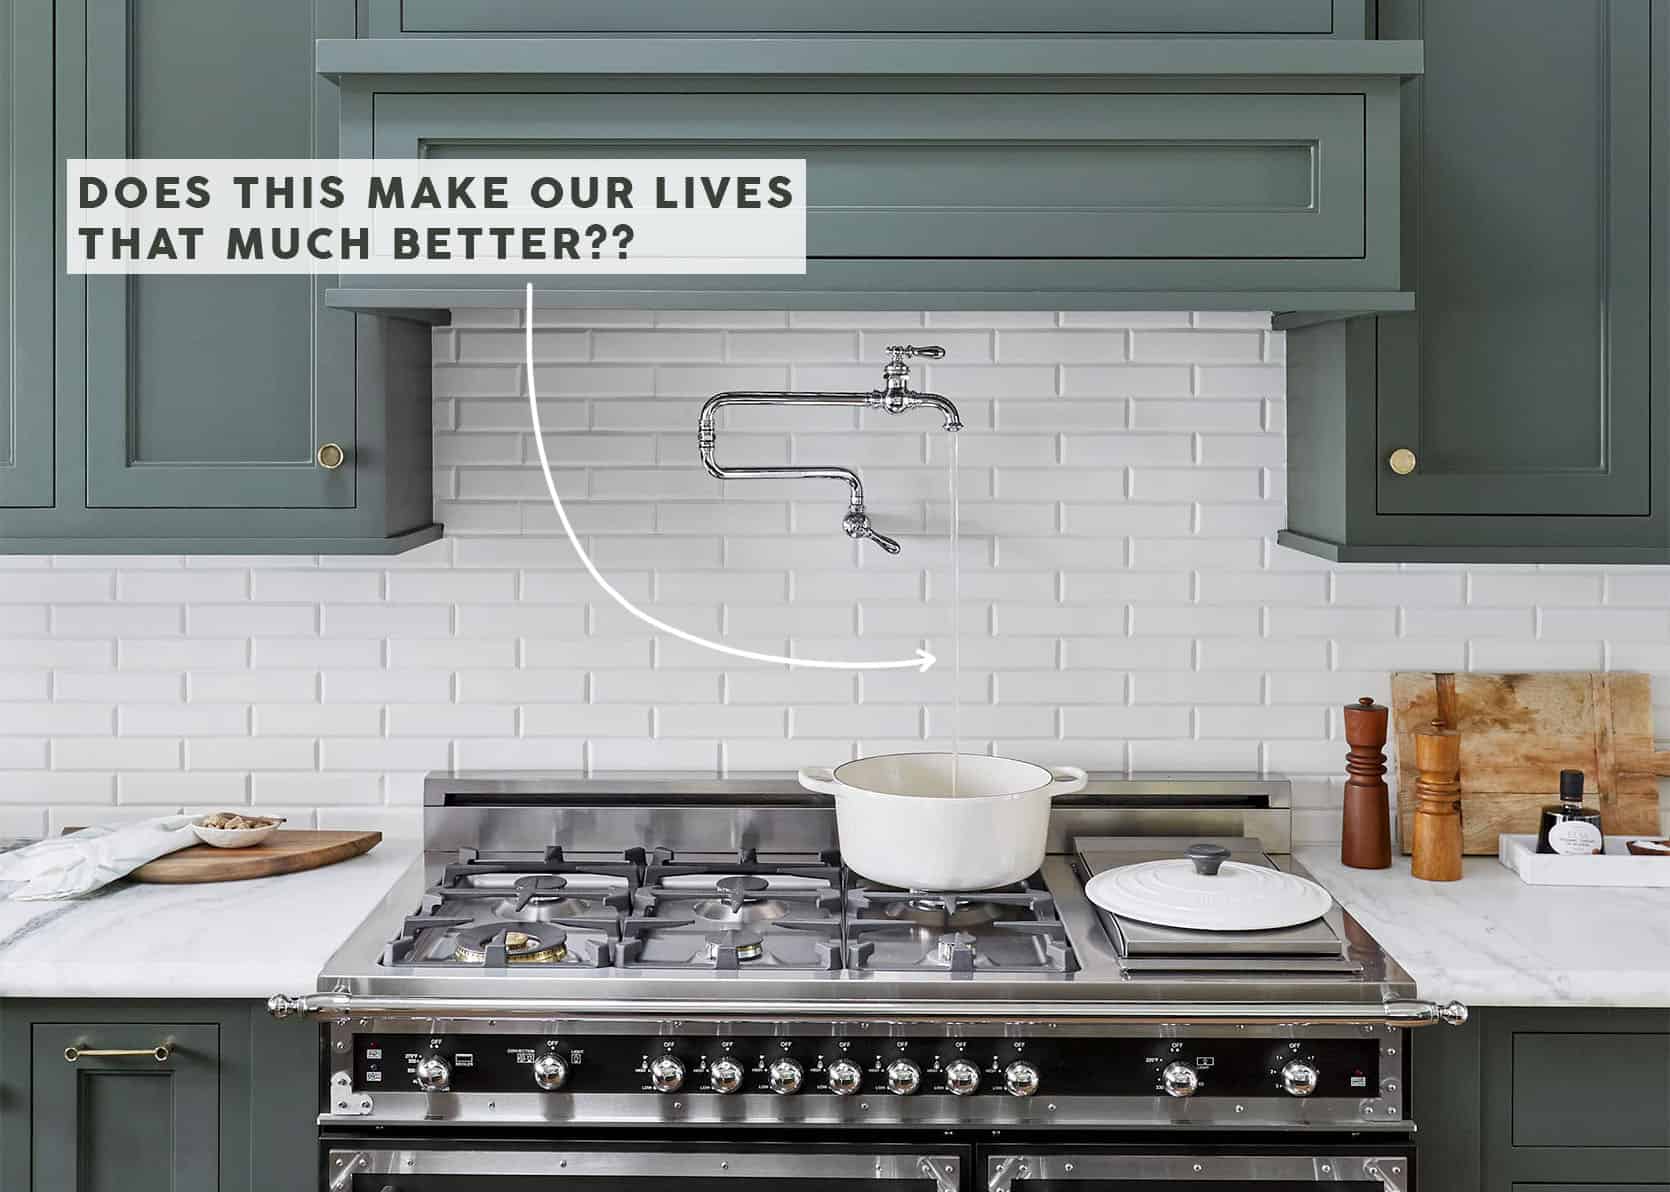 Water Faucet Over Stove | Kitchen stove, Cottage kitchen cabinets, Kitchen backsplash designs